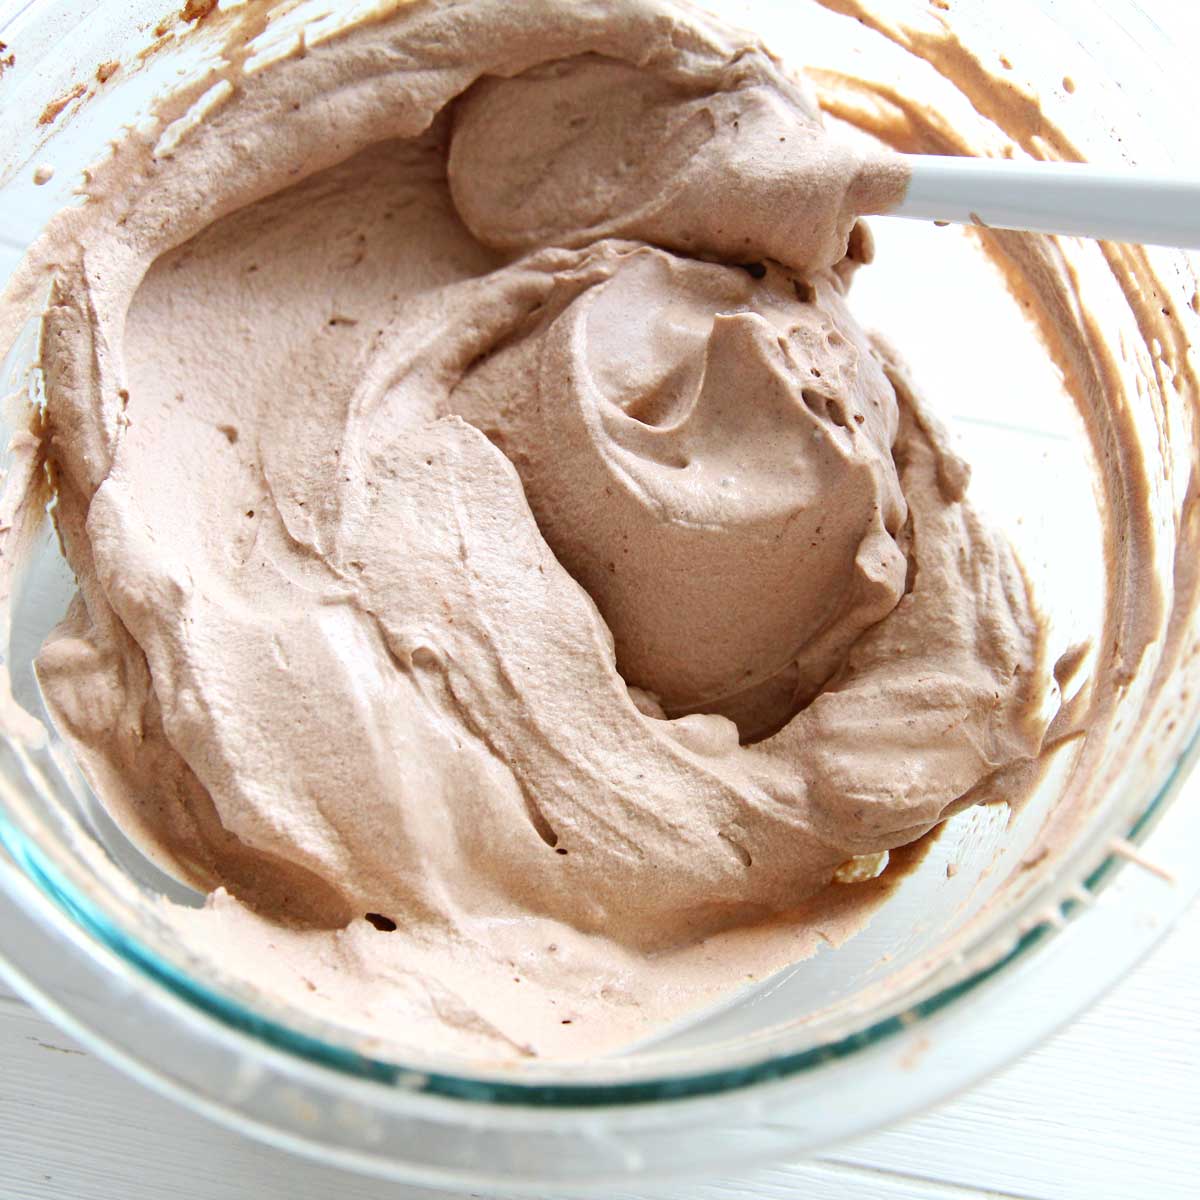 Easy No-Fuss Chocolate Whipped Cream Recipe Using Cocoa Powder - Double Chocolate Scones